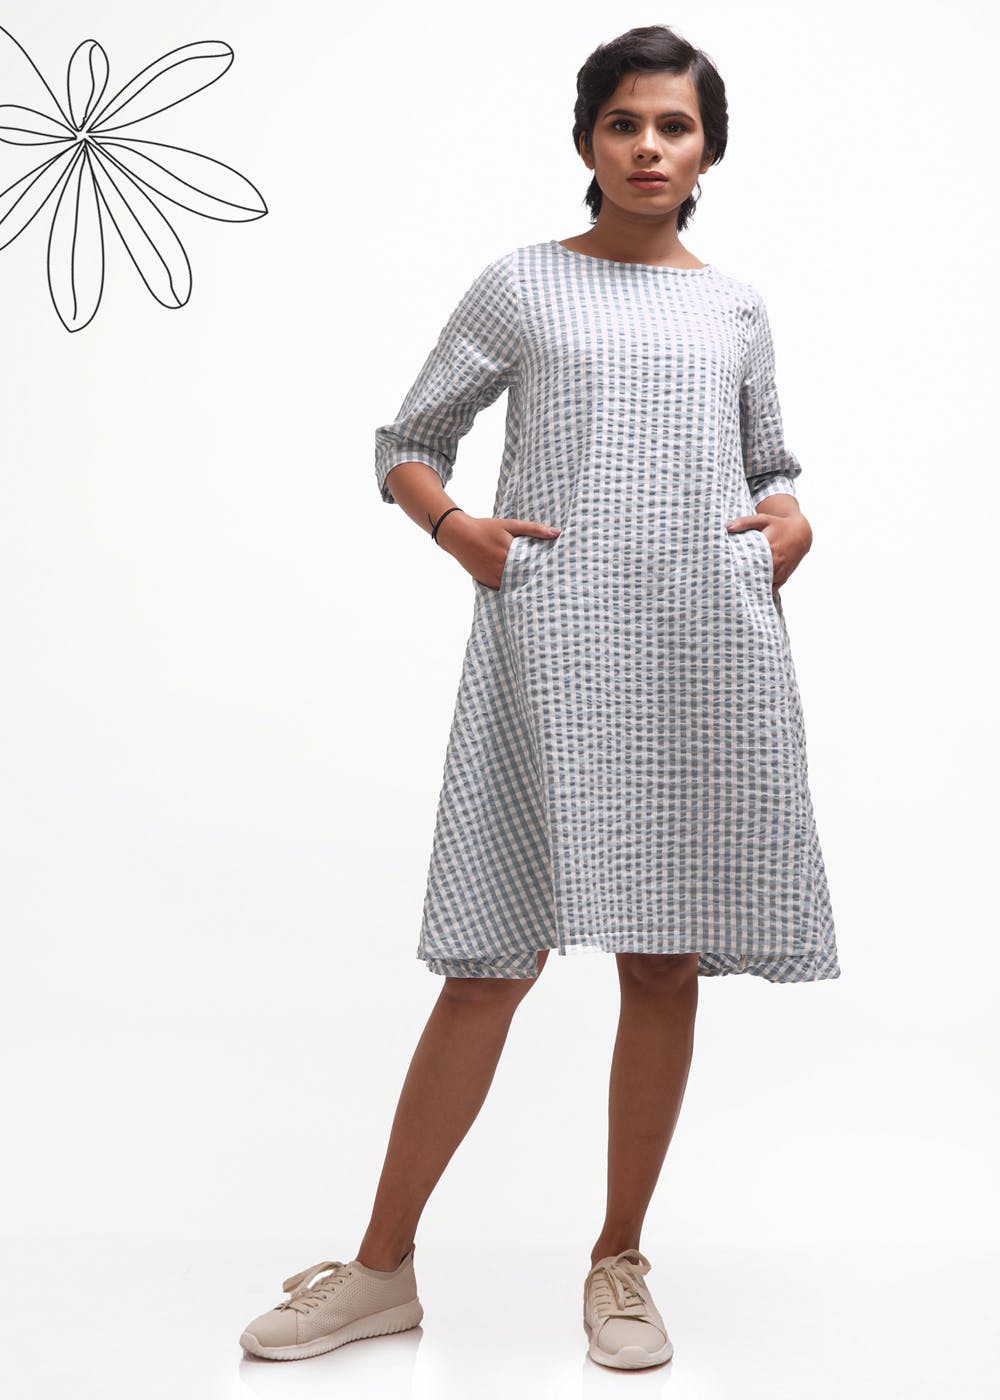 Get Blue - White Checkered Dress at ₹ 1679 | LBB Shop